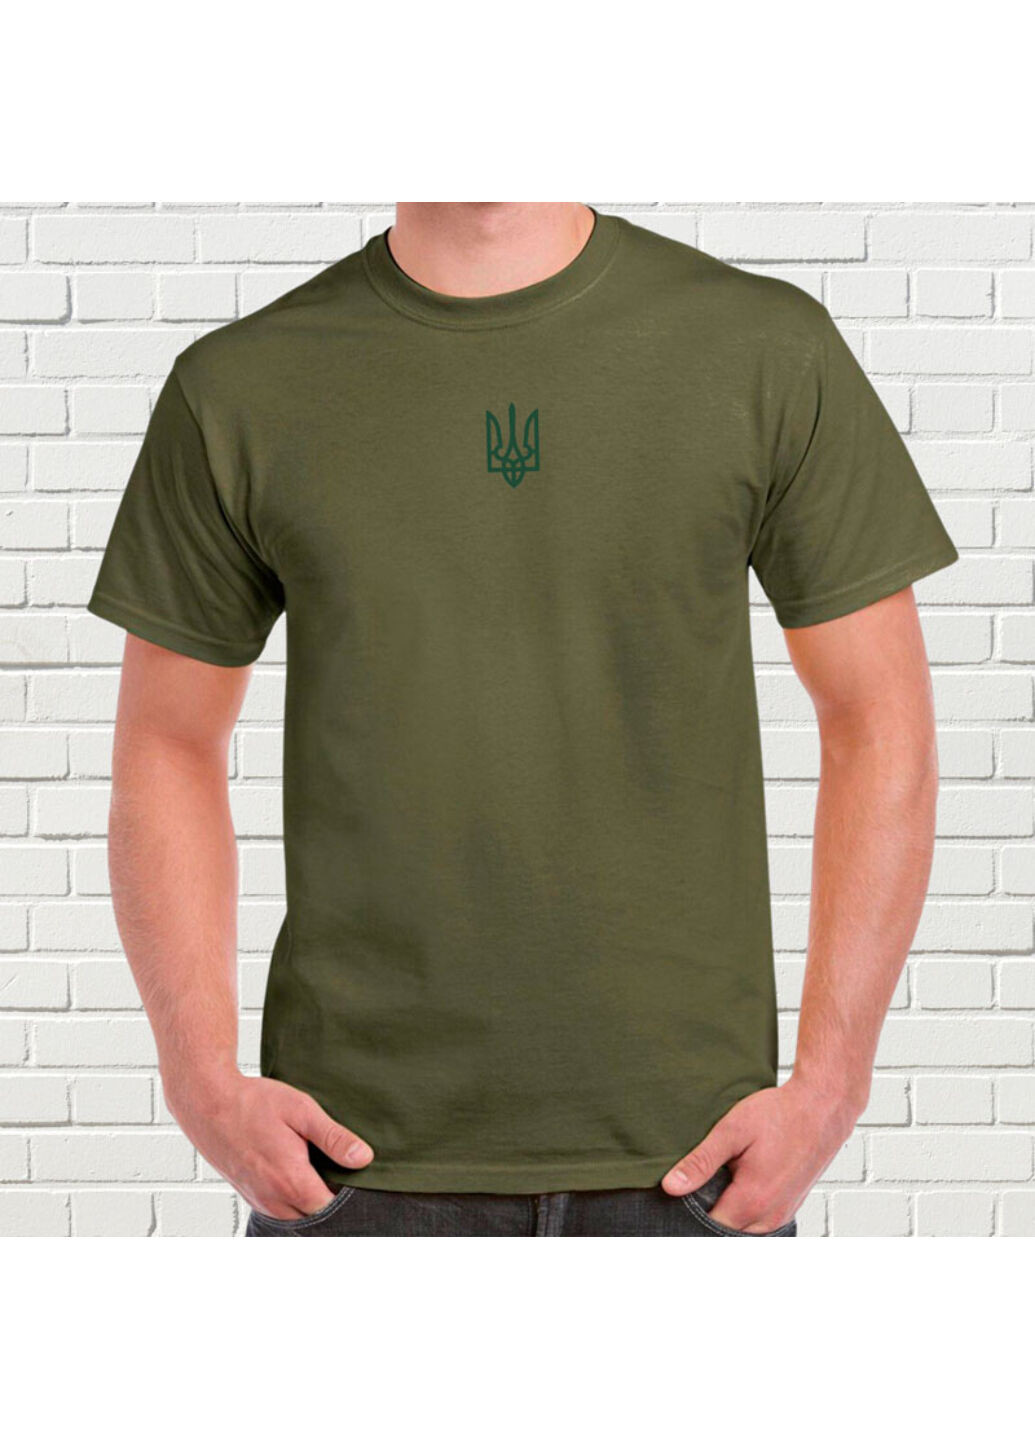 Хаки (оливковая) футболка з вишивкою зеленого тризуба мужская хаки s No Brand